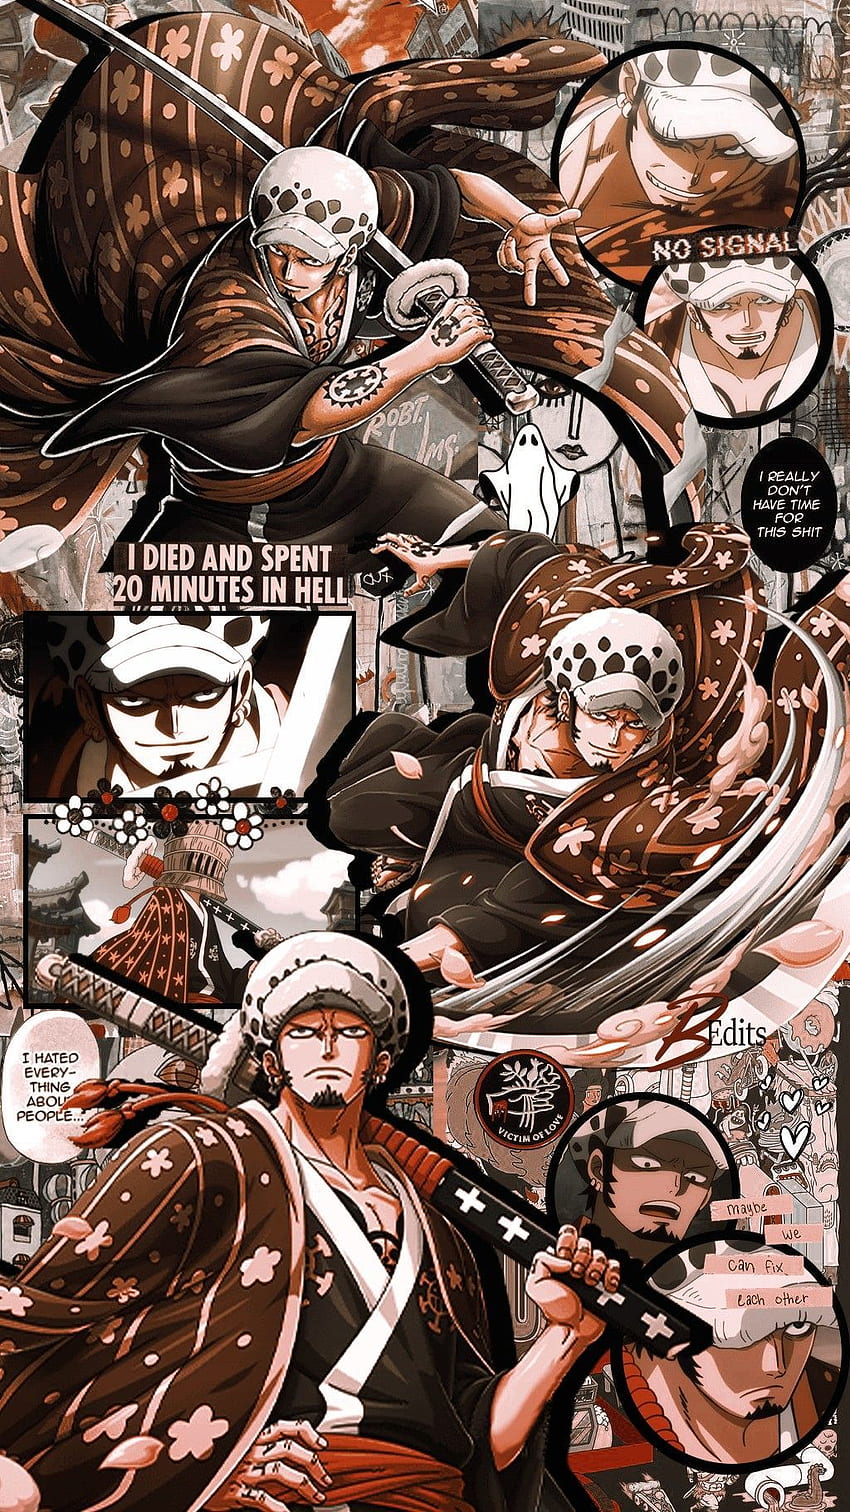 Law onepiece wallpaper | Jiraya, Anime, Marvel